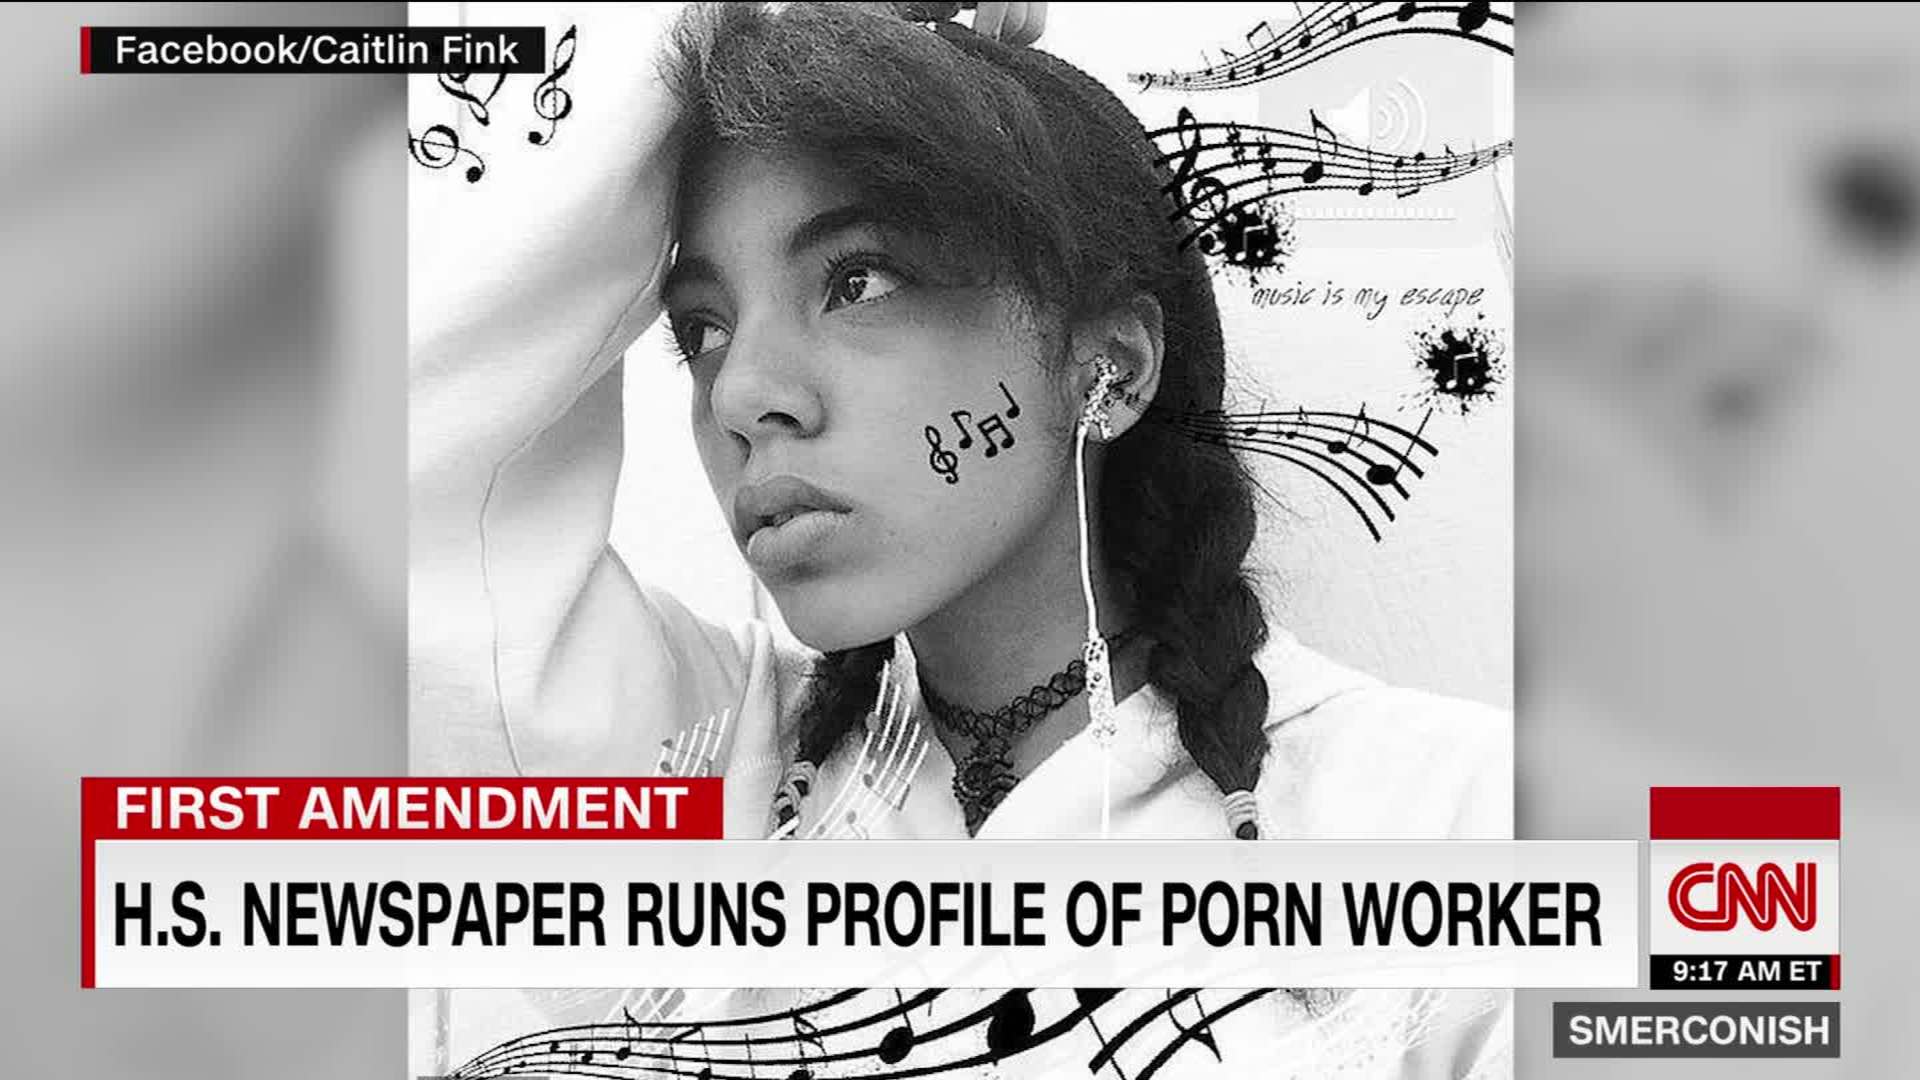 H.S. newspaper runs profile of student porn worker | CNN